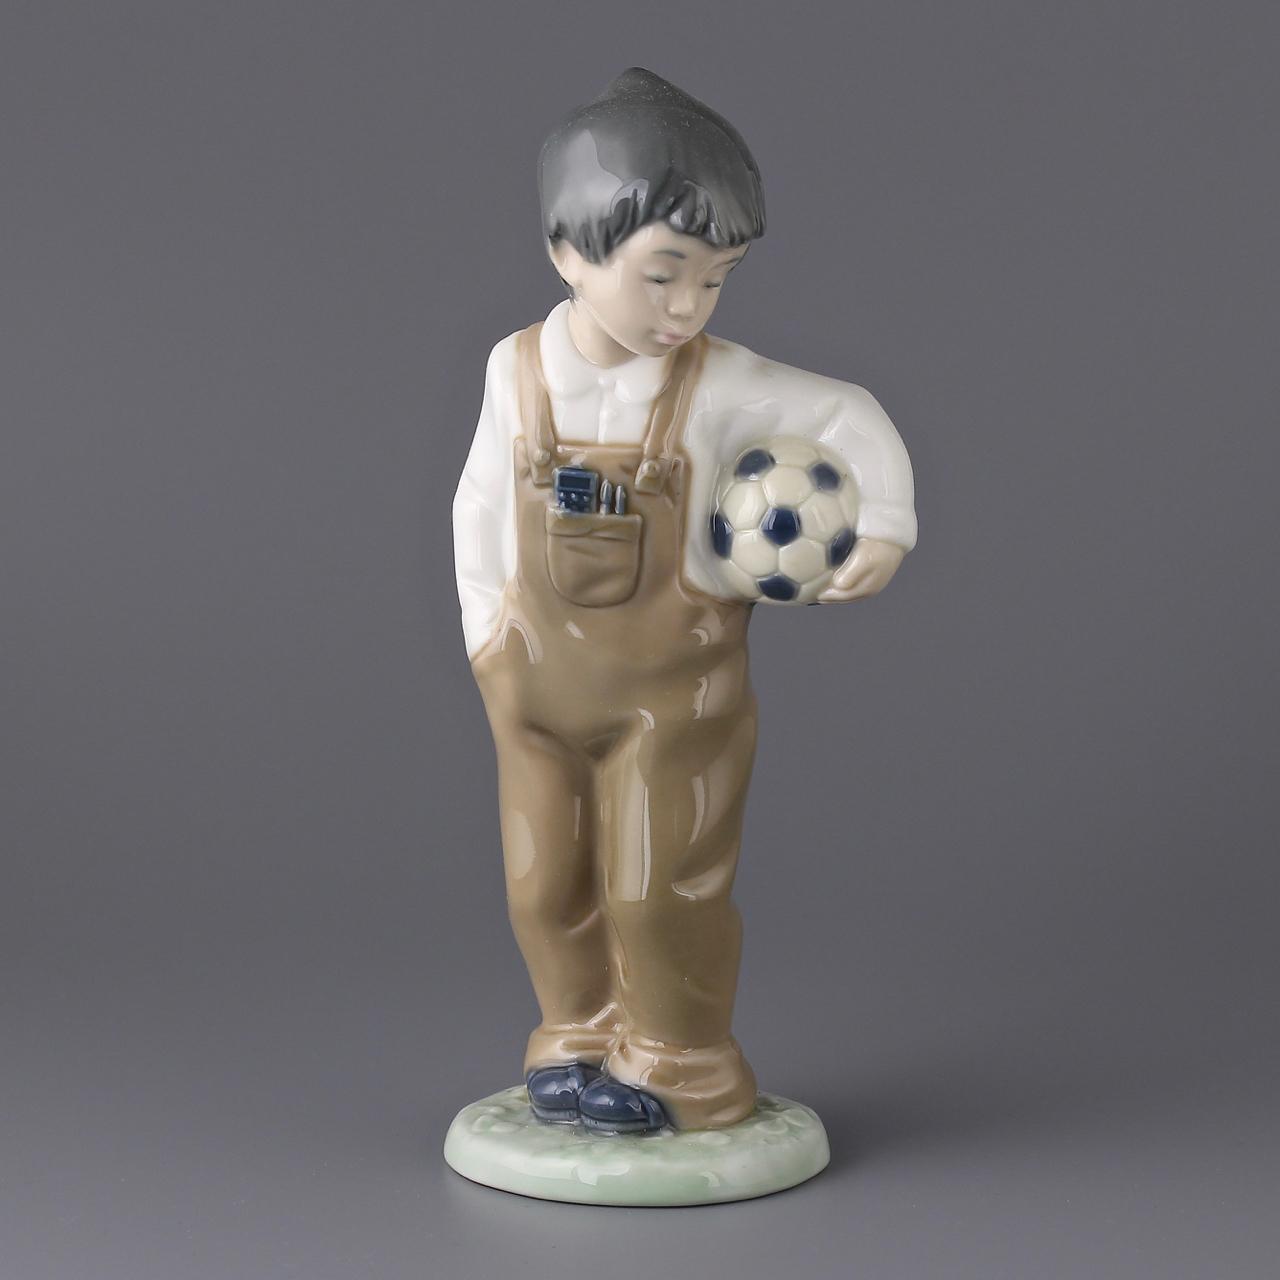 Винтажная статуэтка Lladro NAO 1068 "Футболист"